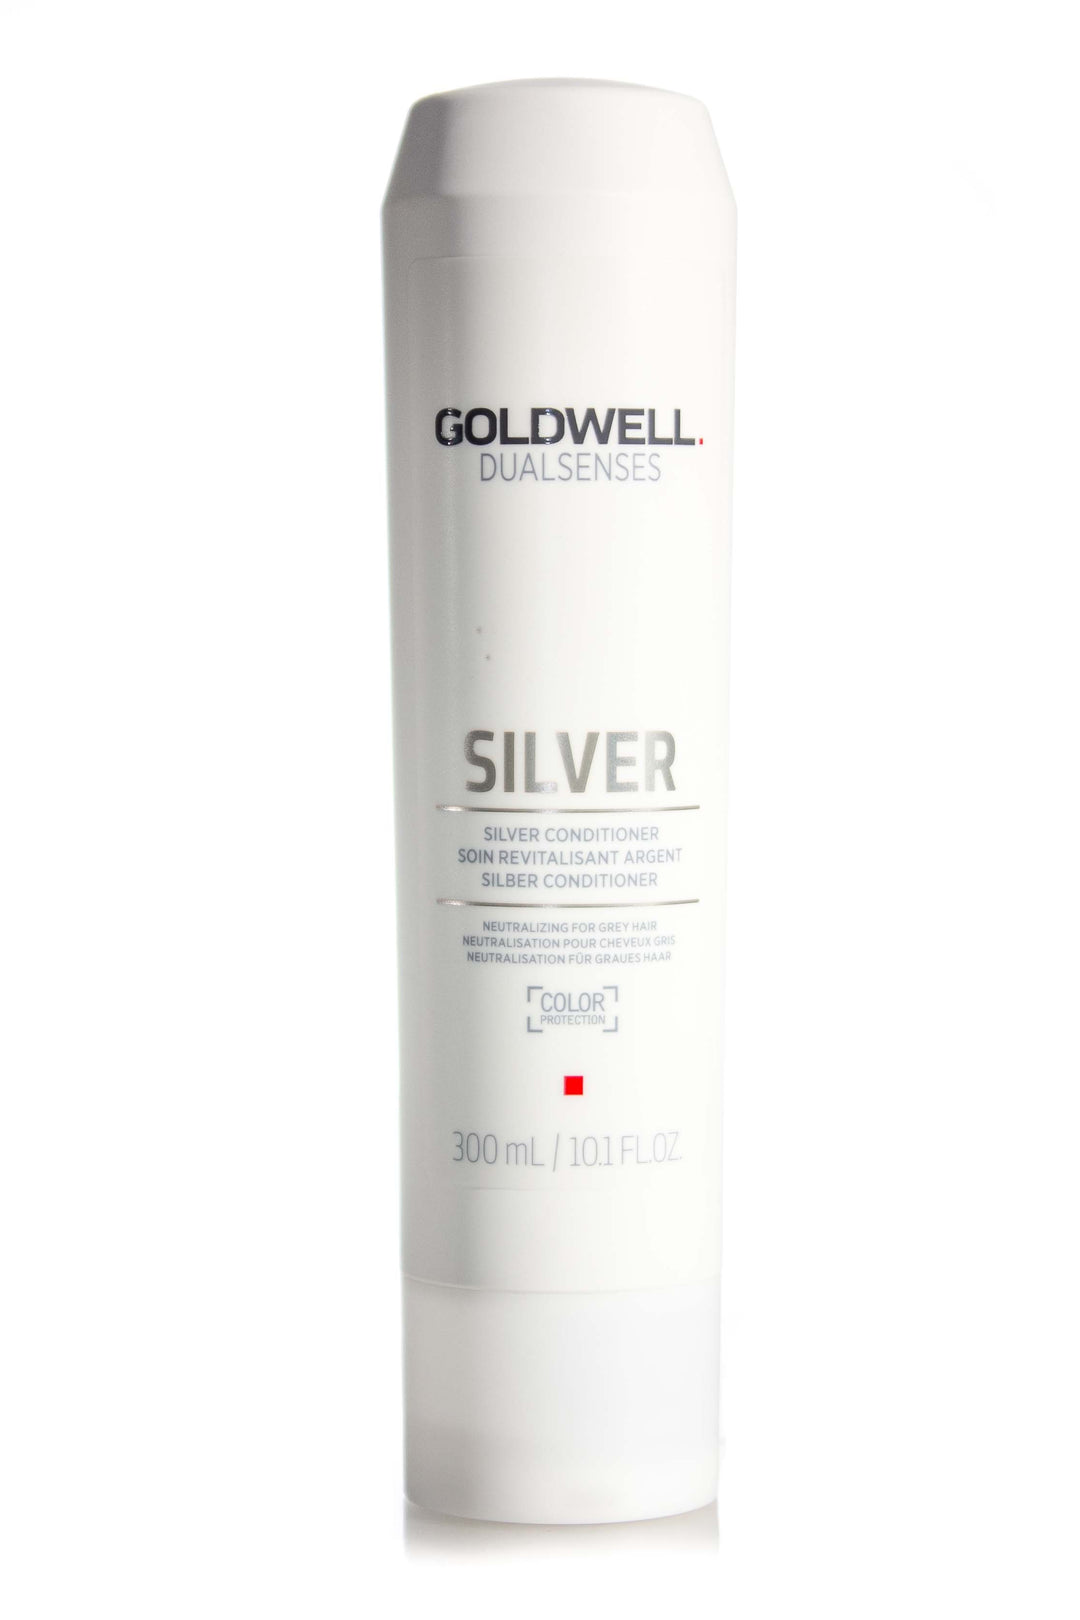 Goldwell Dual Senses Silver Shampoo